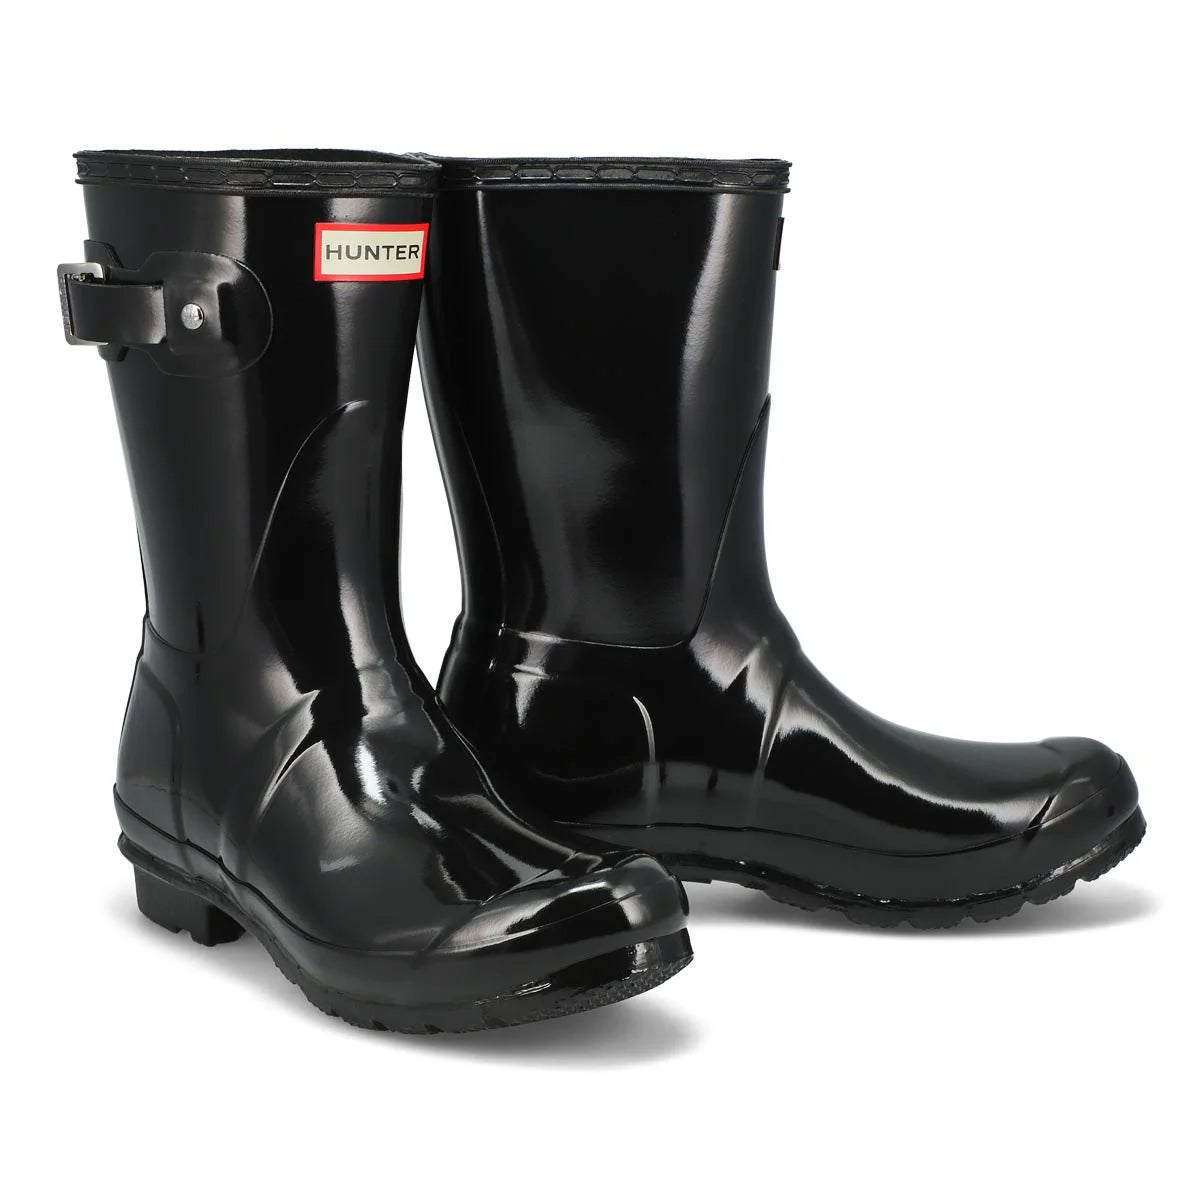 HUNTER Women's Original Short Gloss Rain Boots - Black (US 6)